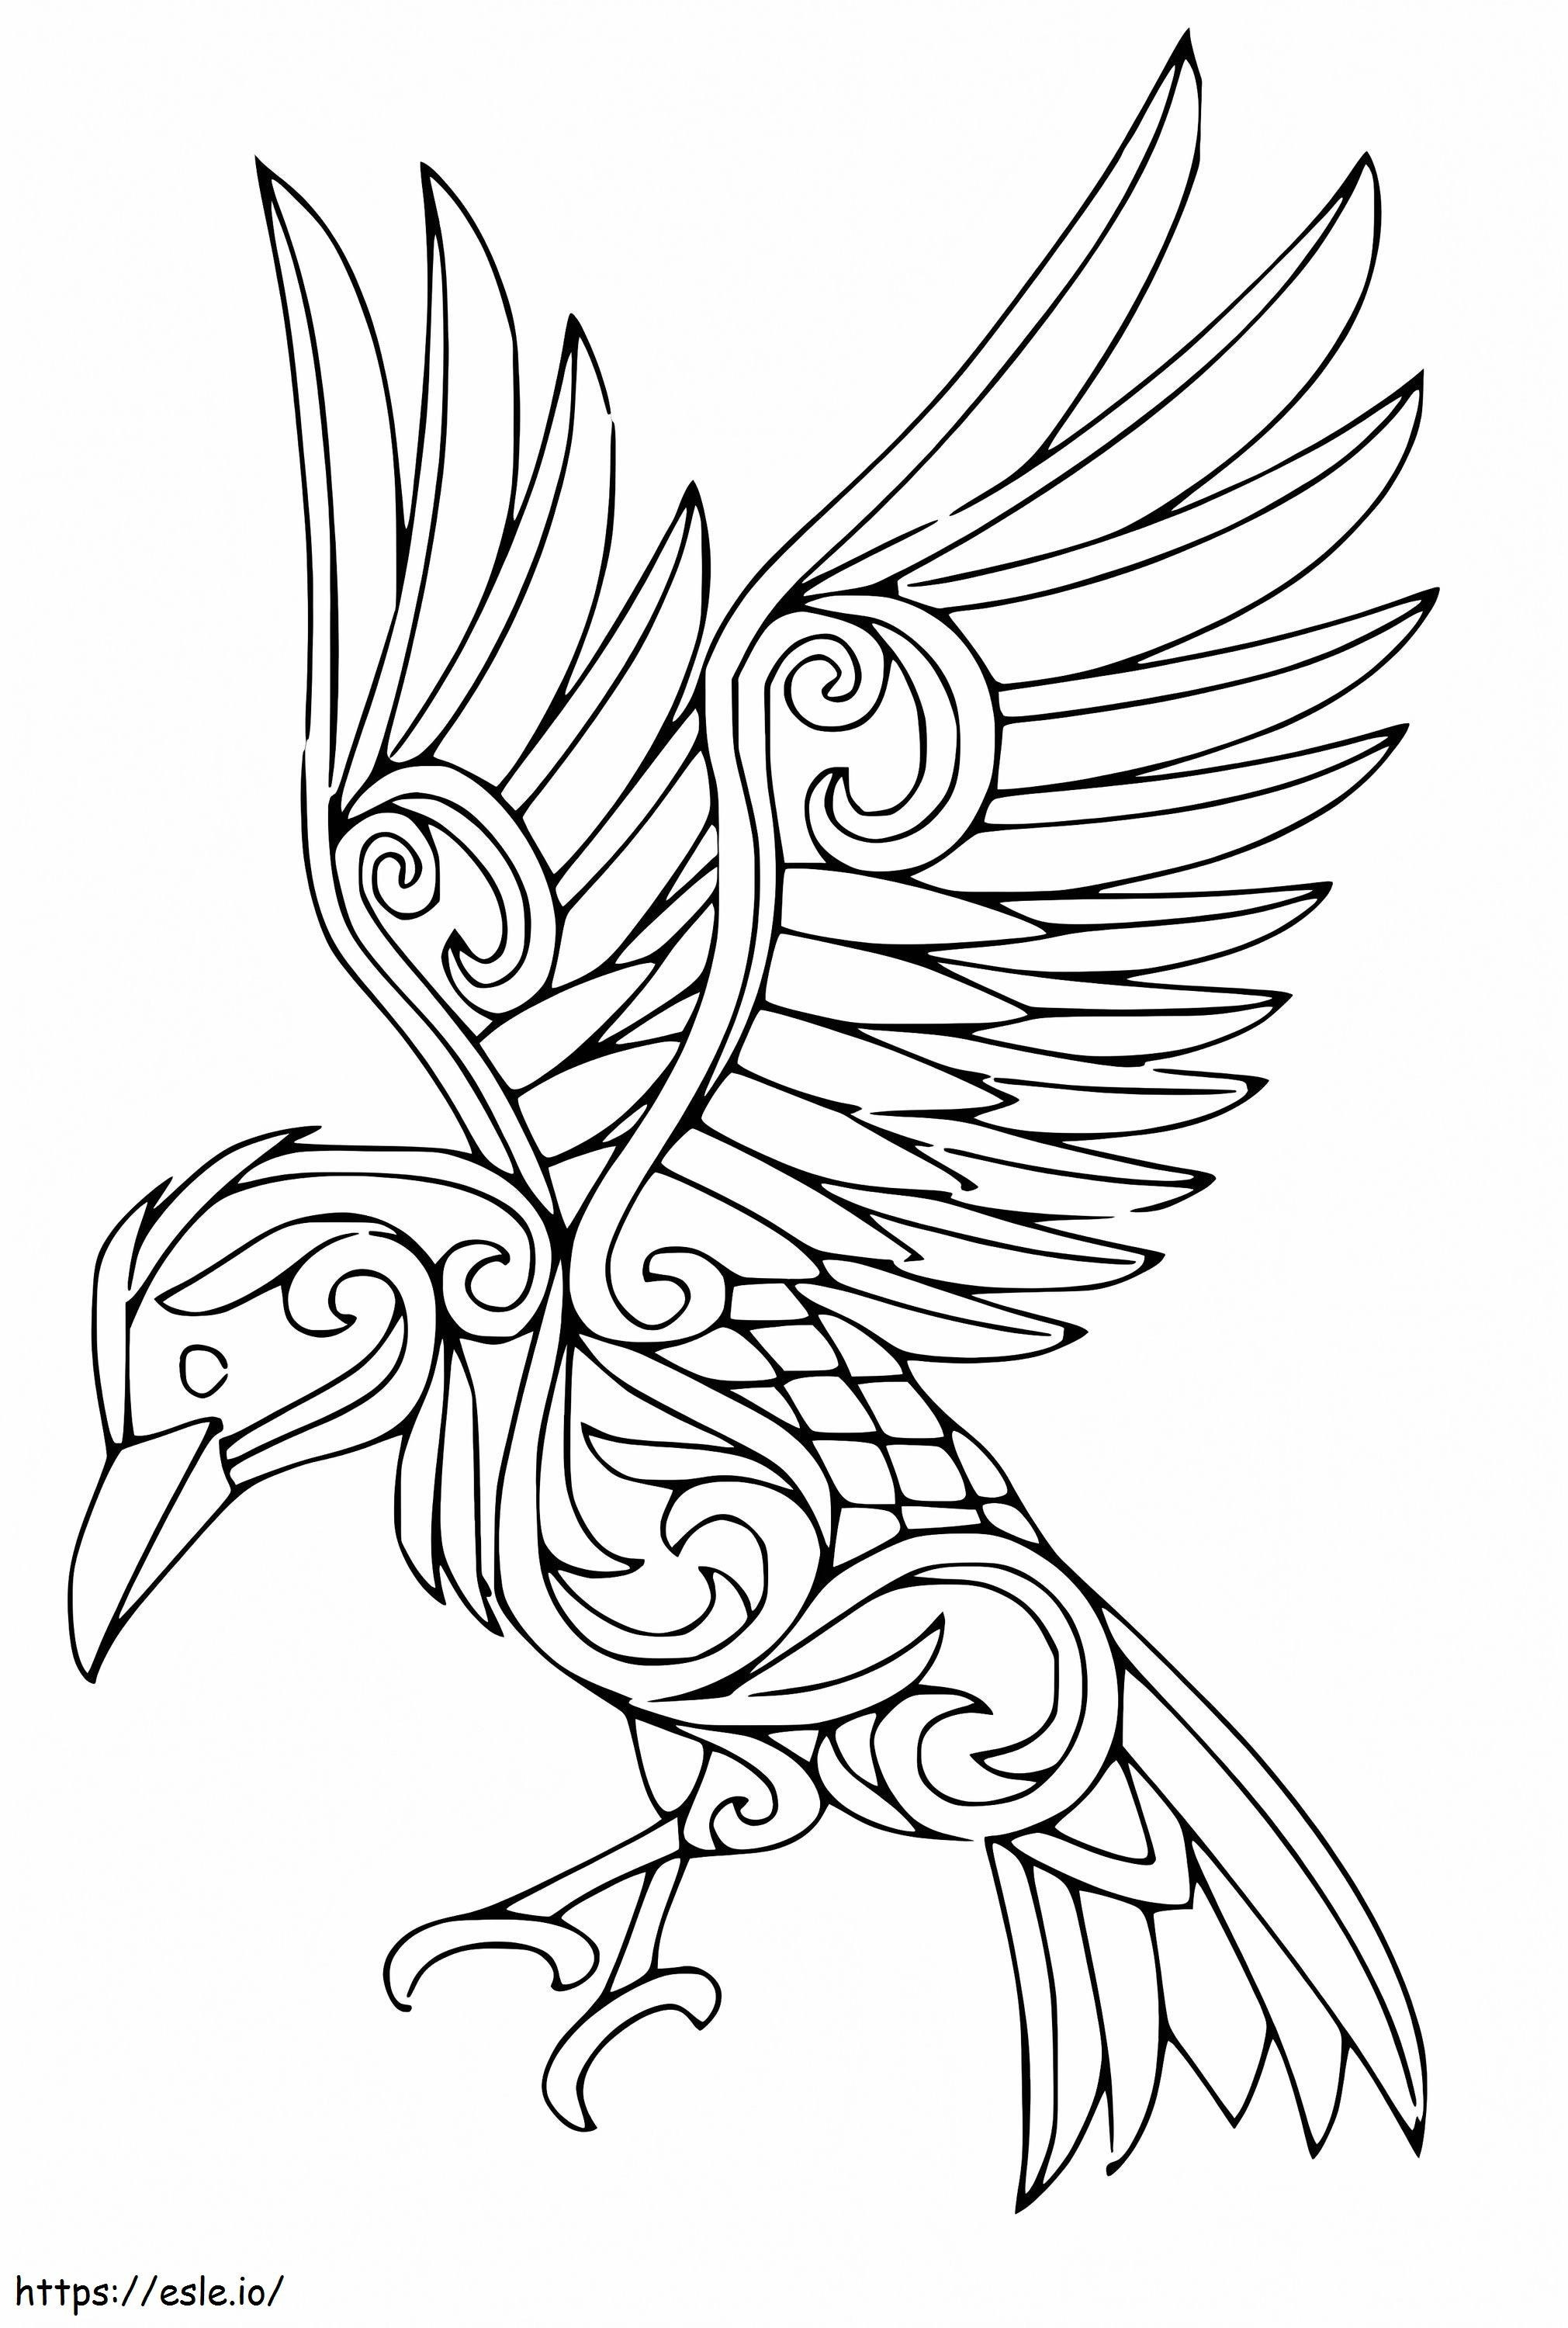 Raven Art coloring page